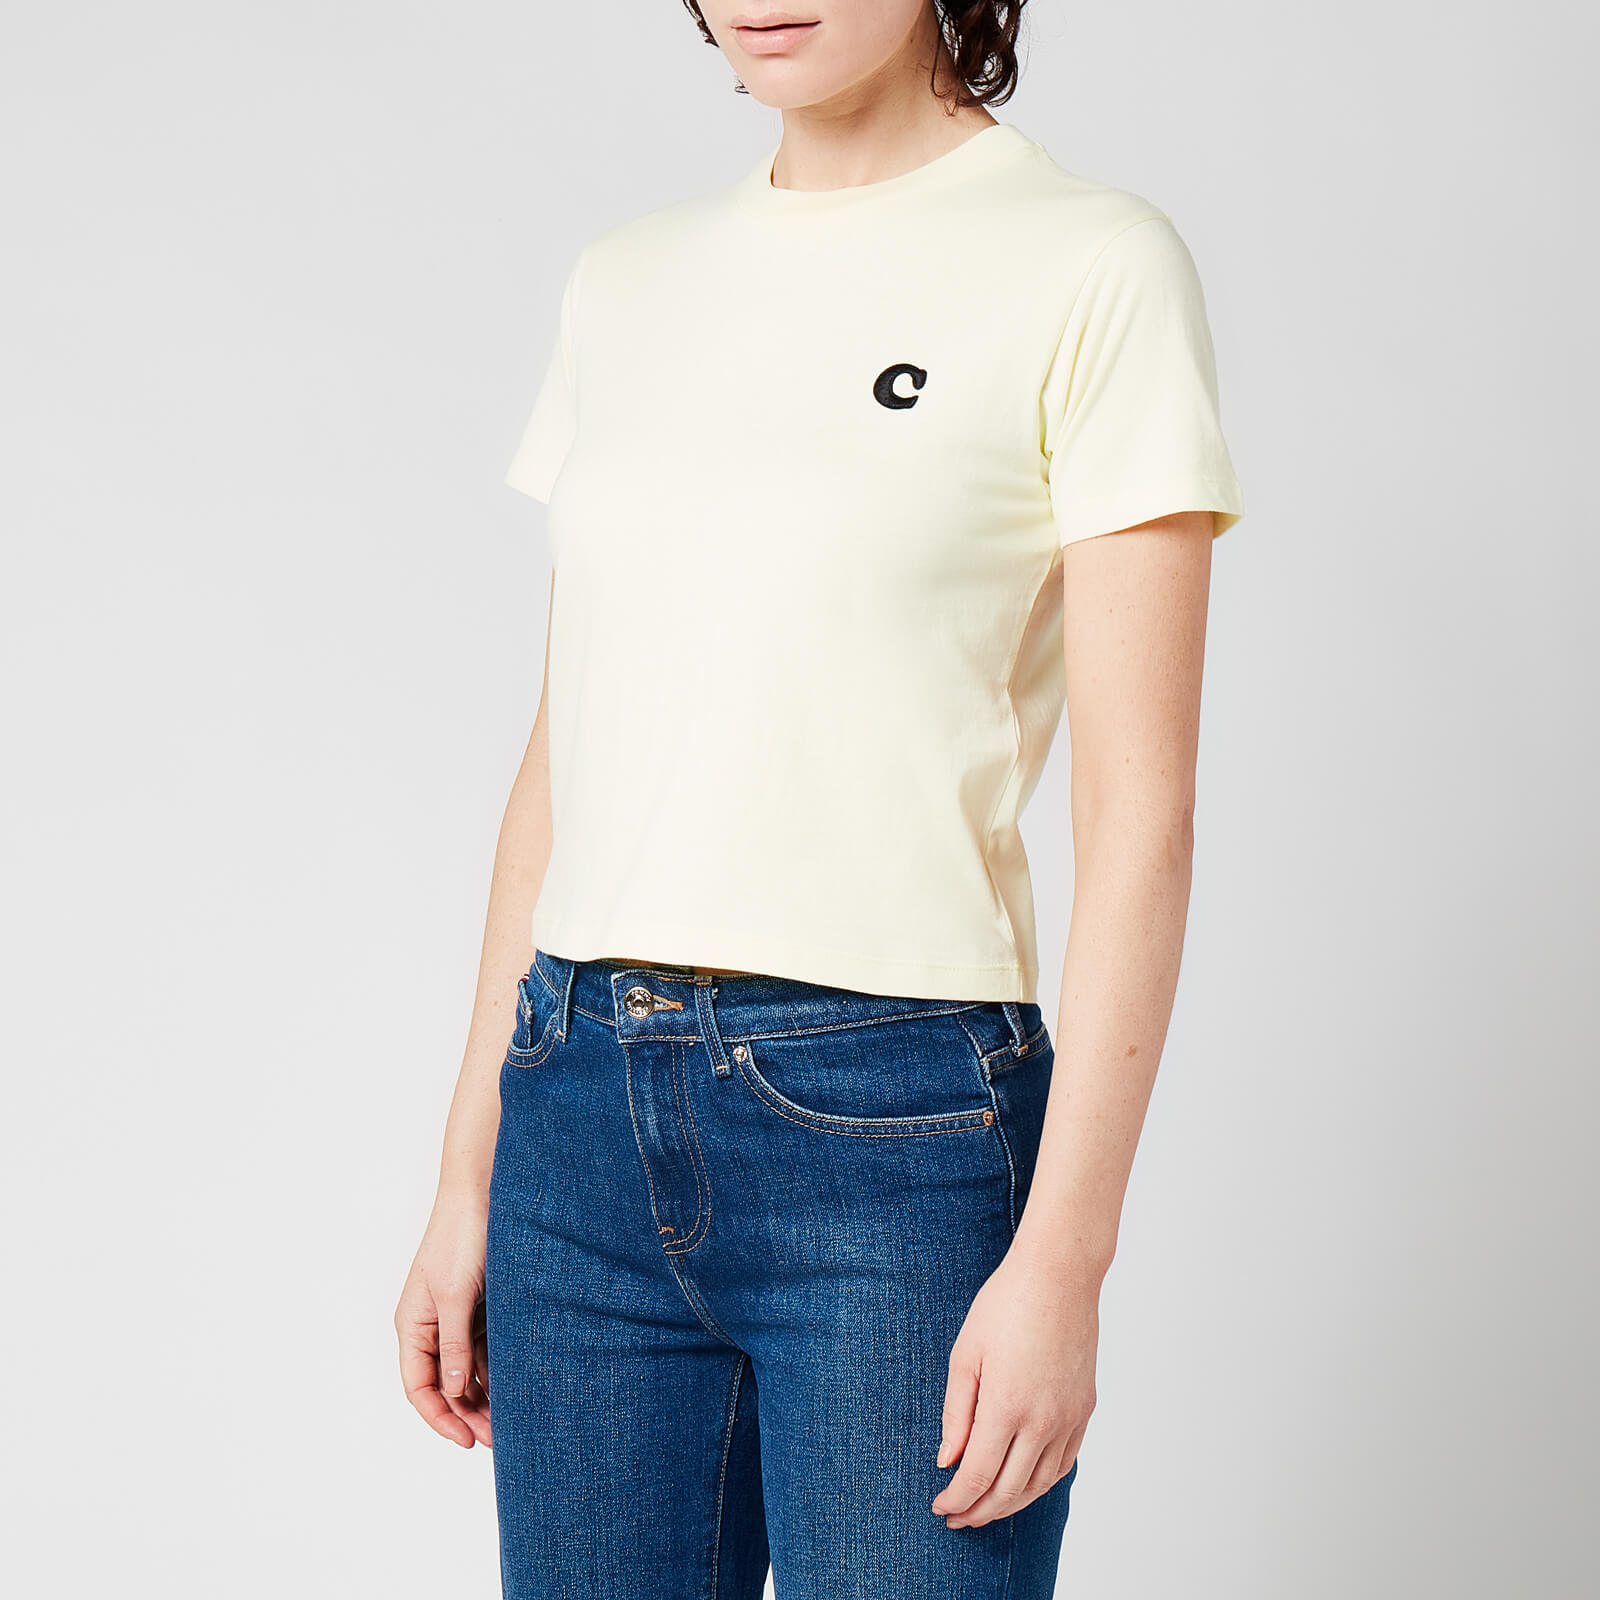 Être Cécile Women's Ice Scream Crop T-Shirt - Wax Yellow - XS